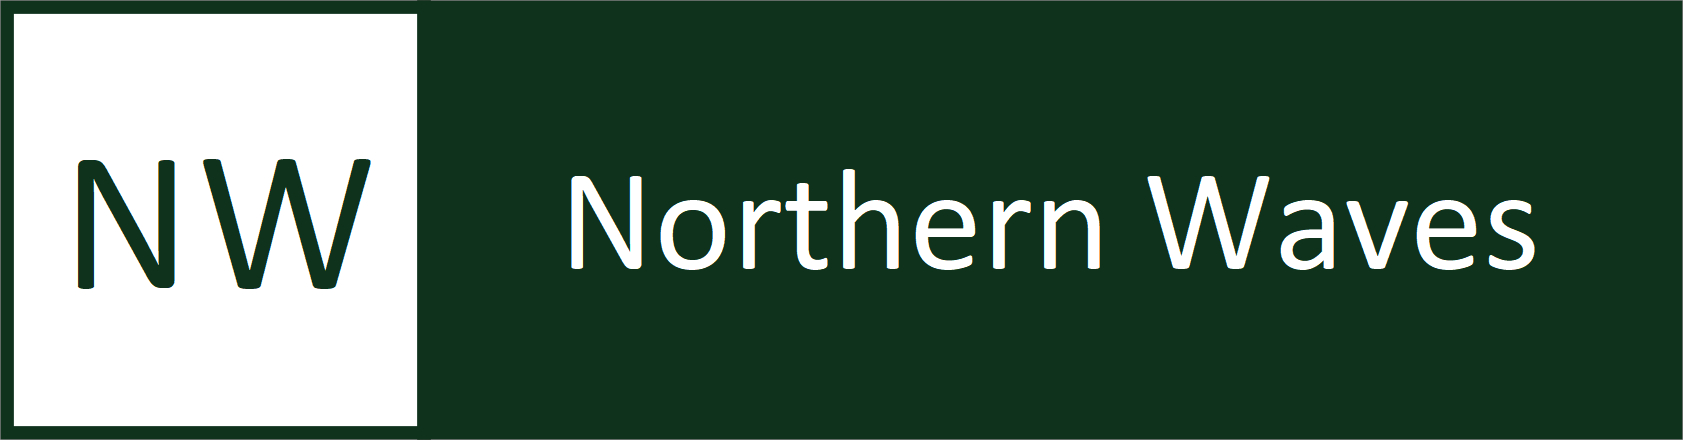 Northern Waves Logo